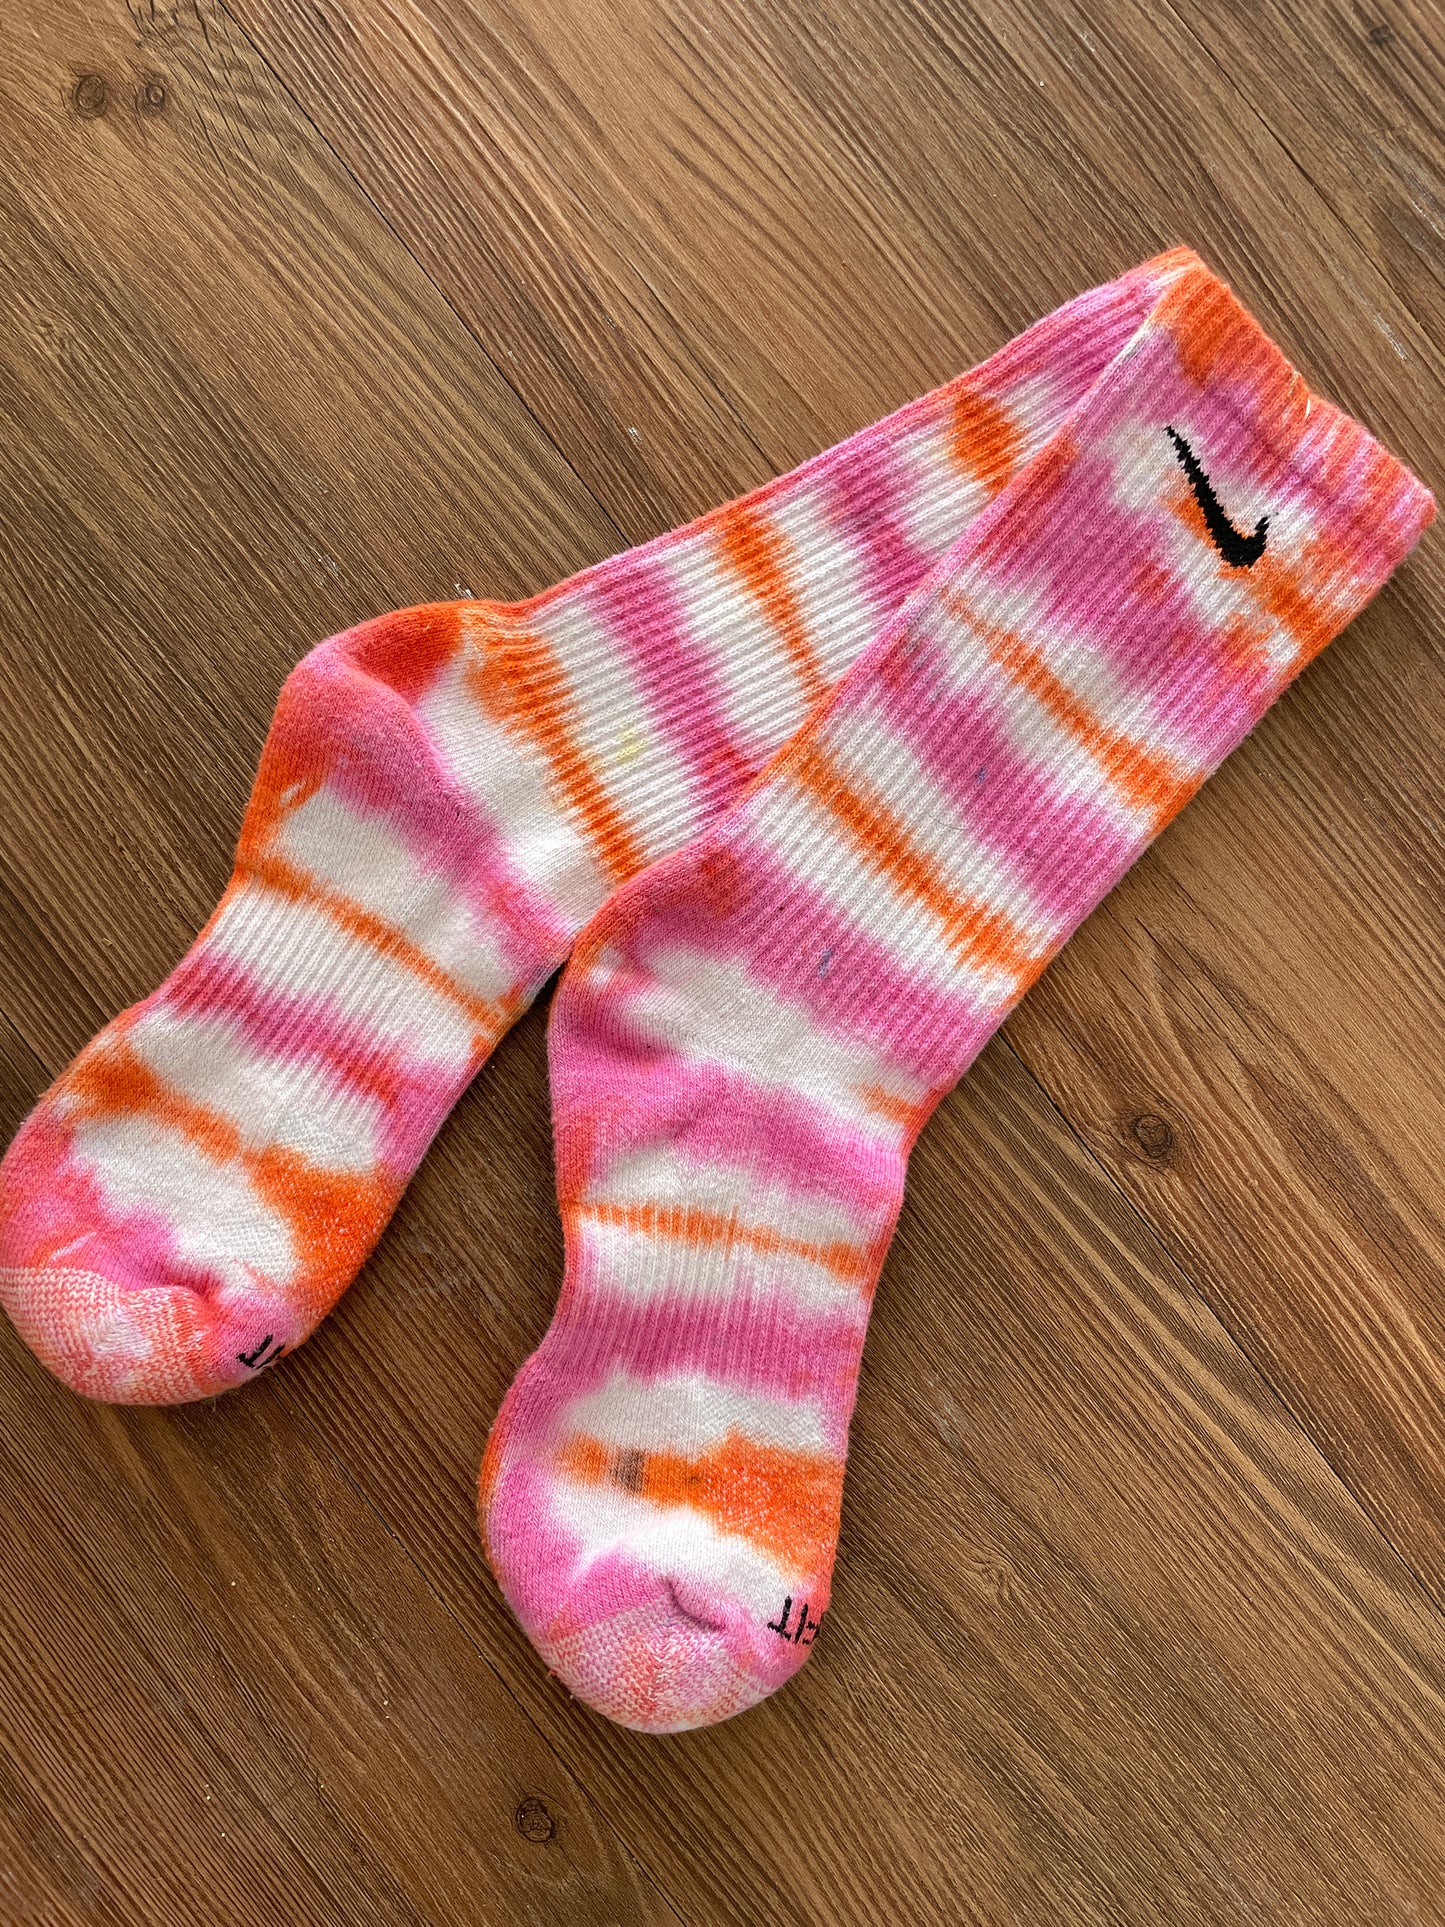 Pink, Orange, and White Tie Dye Nike Dri-FIT Everyday Plus Training Socks - Size Medium (Men's 6-8/Women's 7-10)